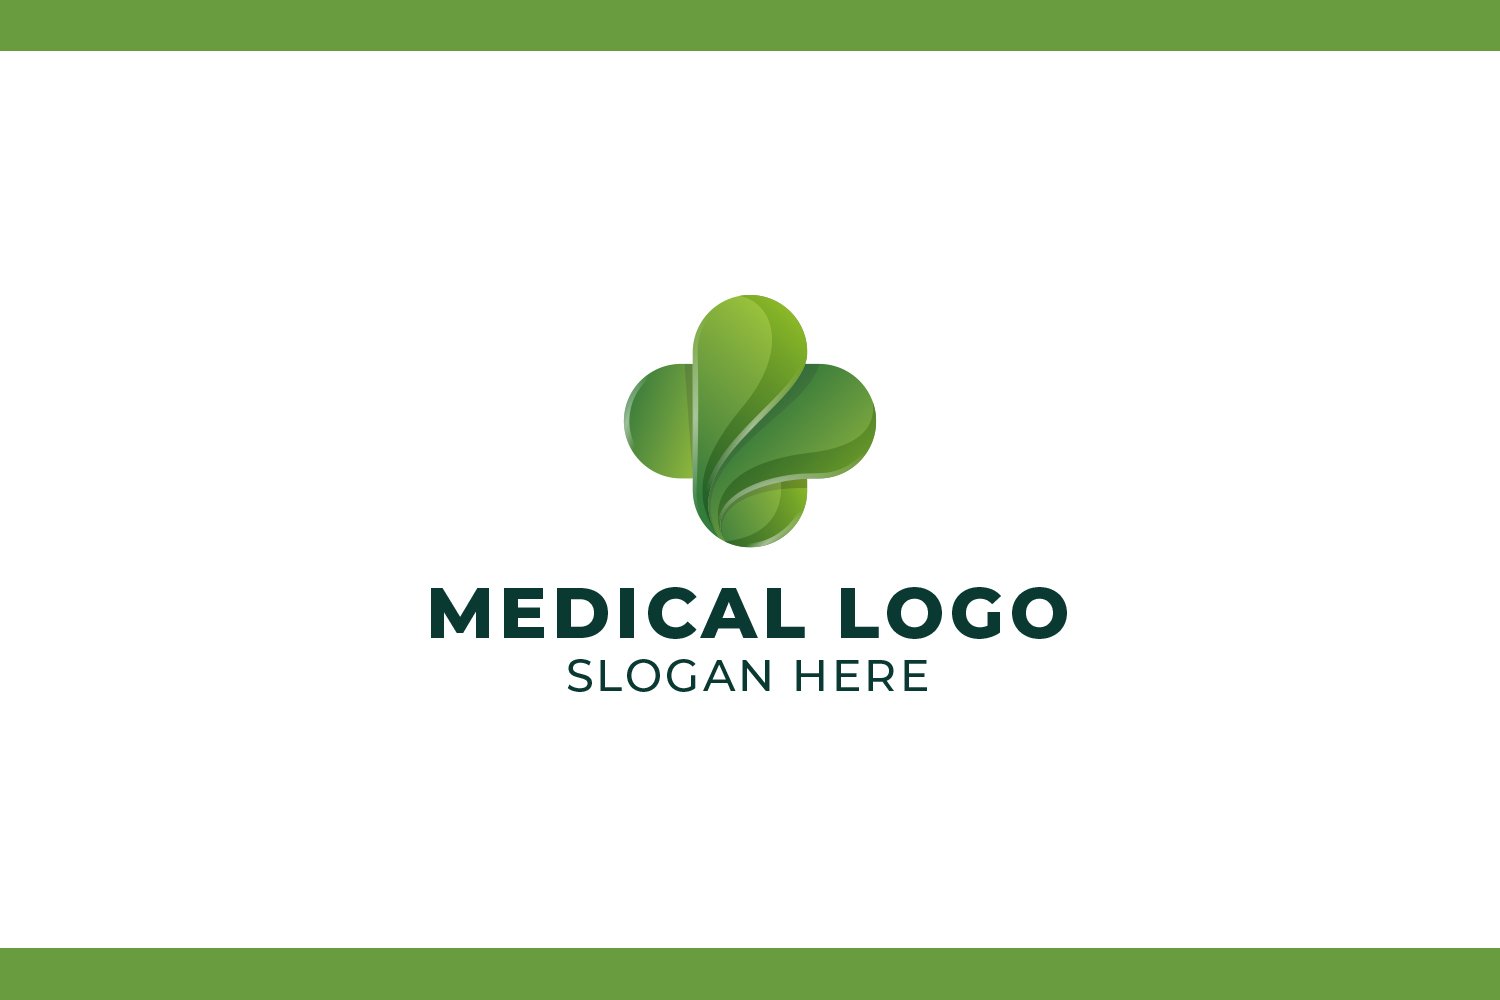 Medical Cross Logo Design cover image.